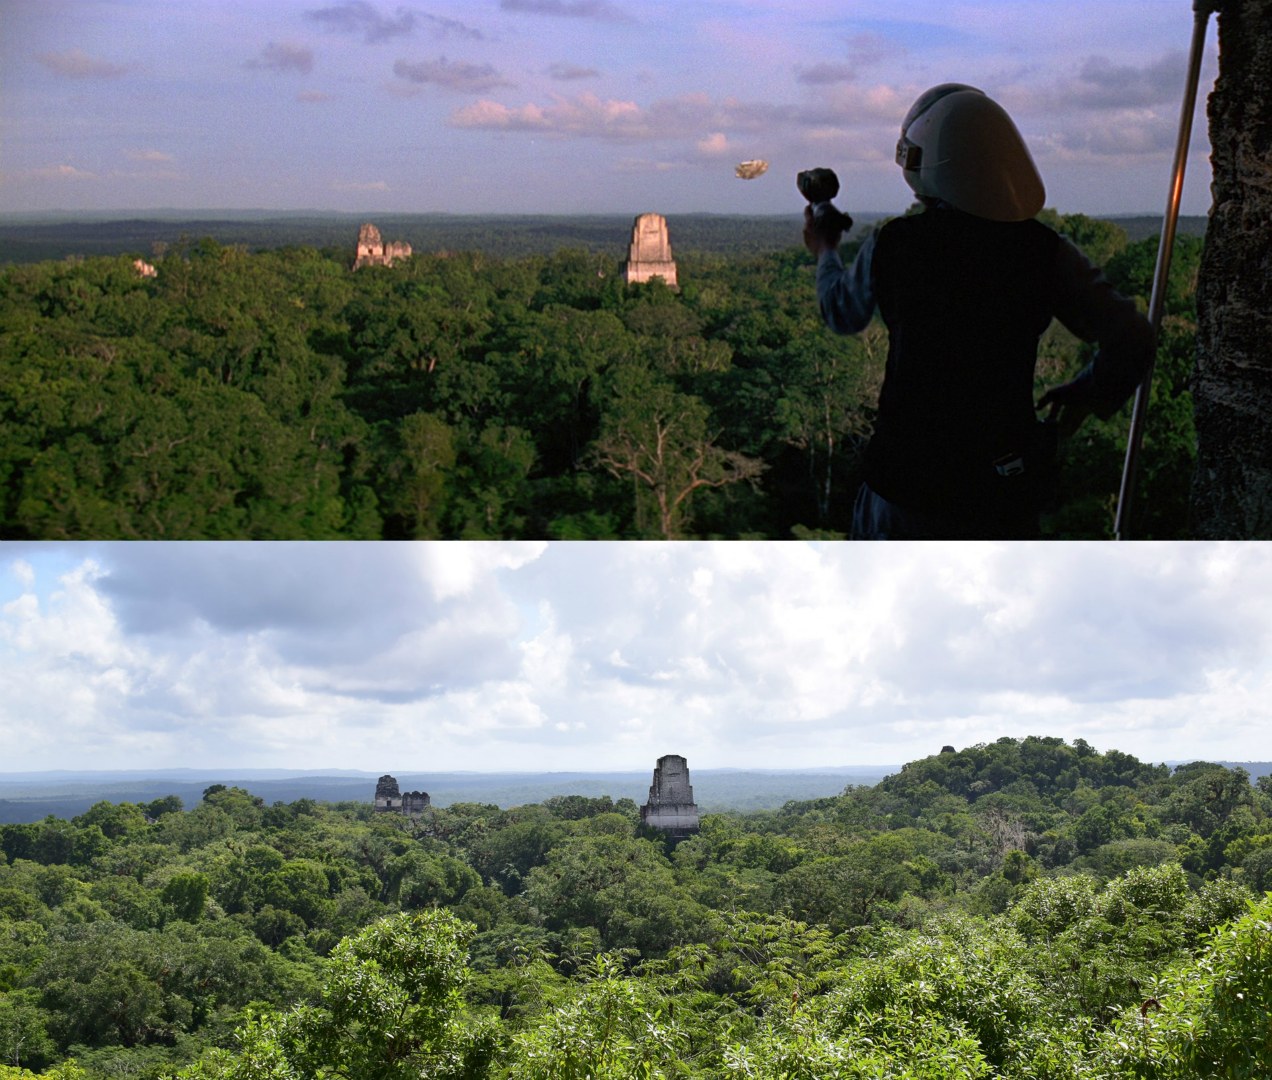 Scenes from Yavin IV moon (Star Wars) and Tikal, Guatemala